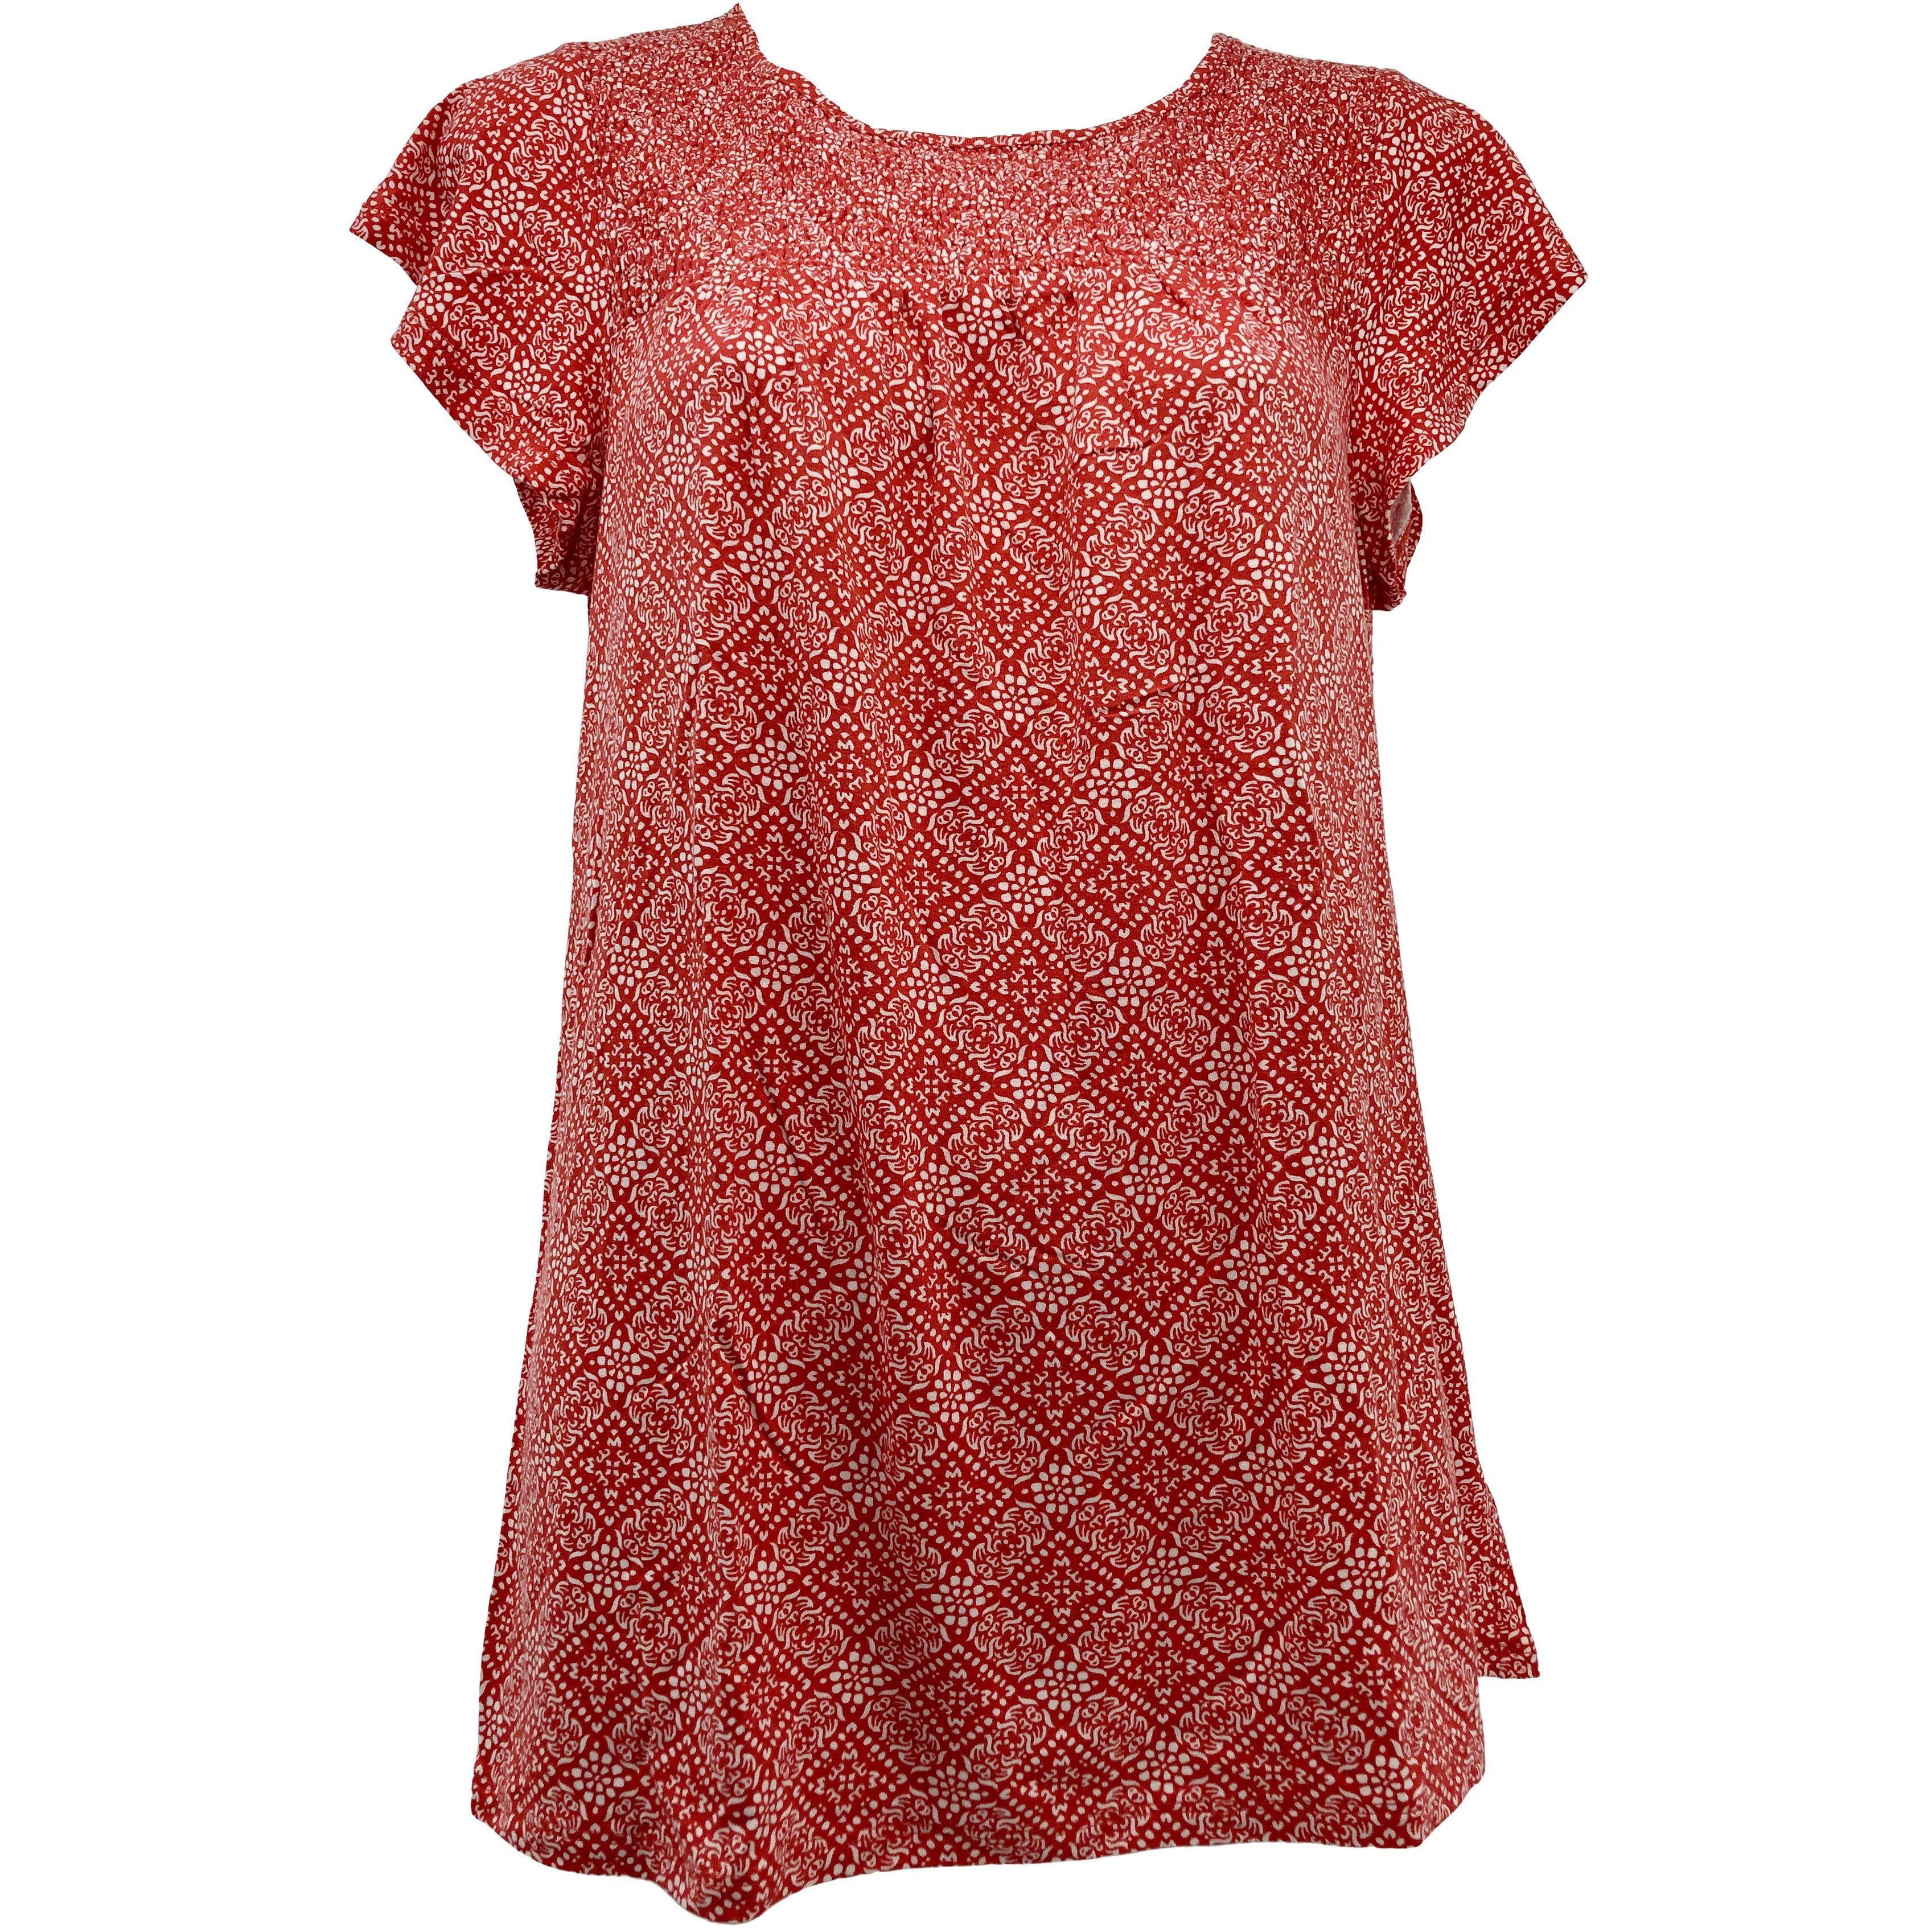 Hilary Radley Women's Short Sleeve Blouse / Patterned Top / Red & White / Various Sizes